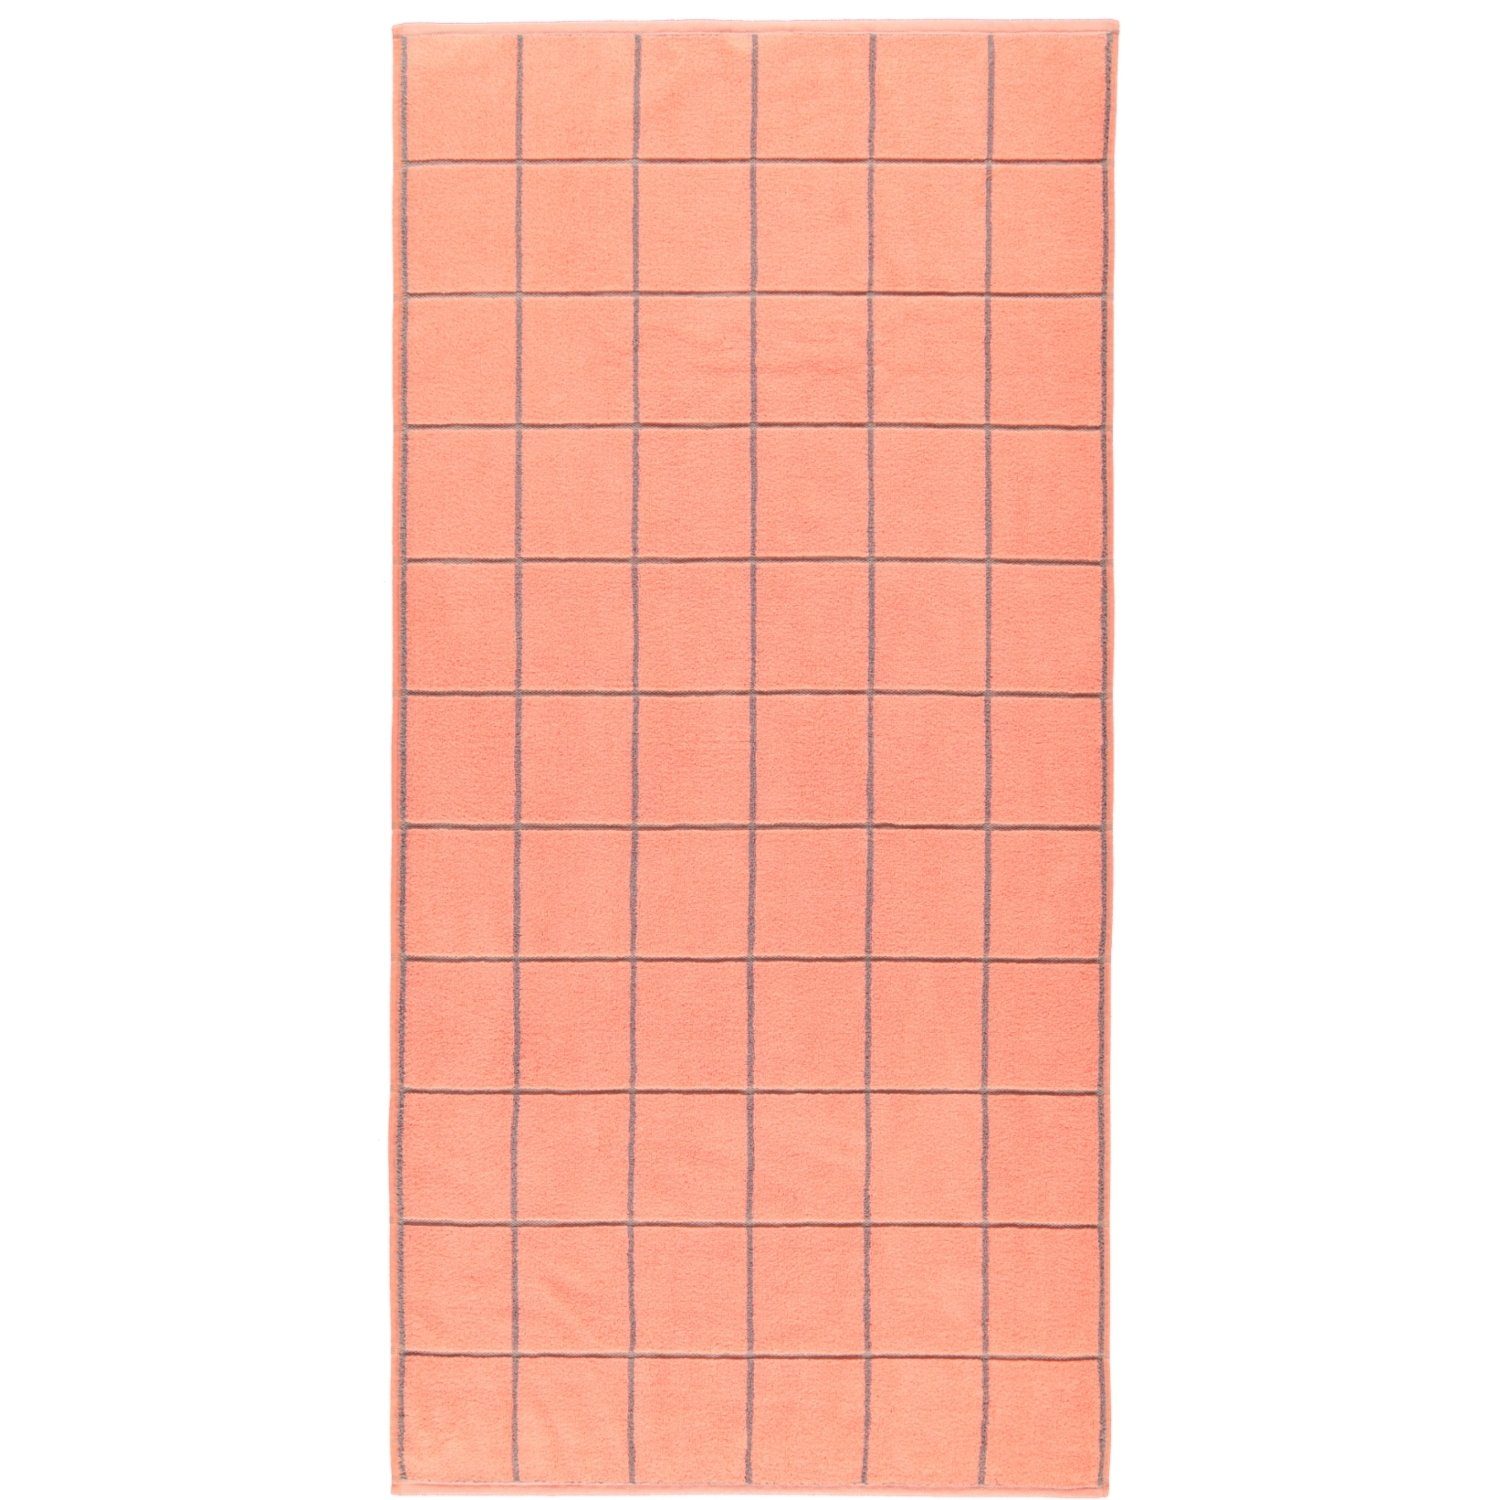 ROSS 9032, Handtücher pink Überkaro peach 100% Baumwolle